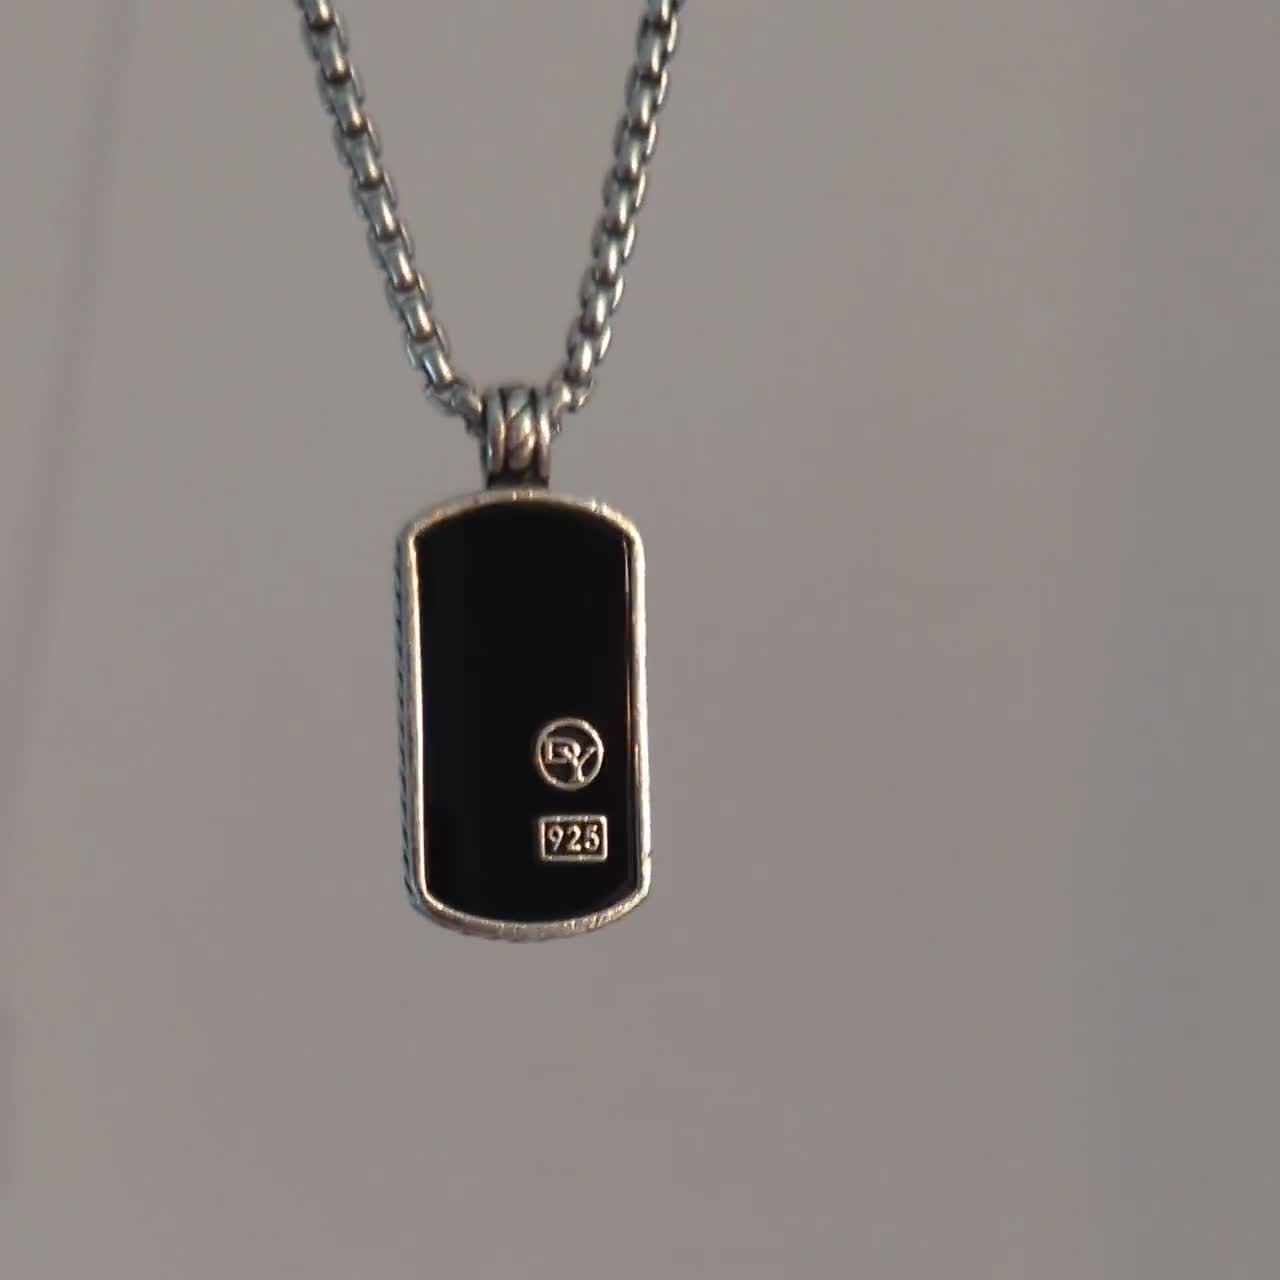 Men's Black Onyx Dog Tag Shape Bullet Necklace – SureShot Jewelry